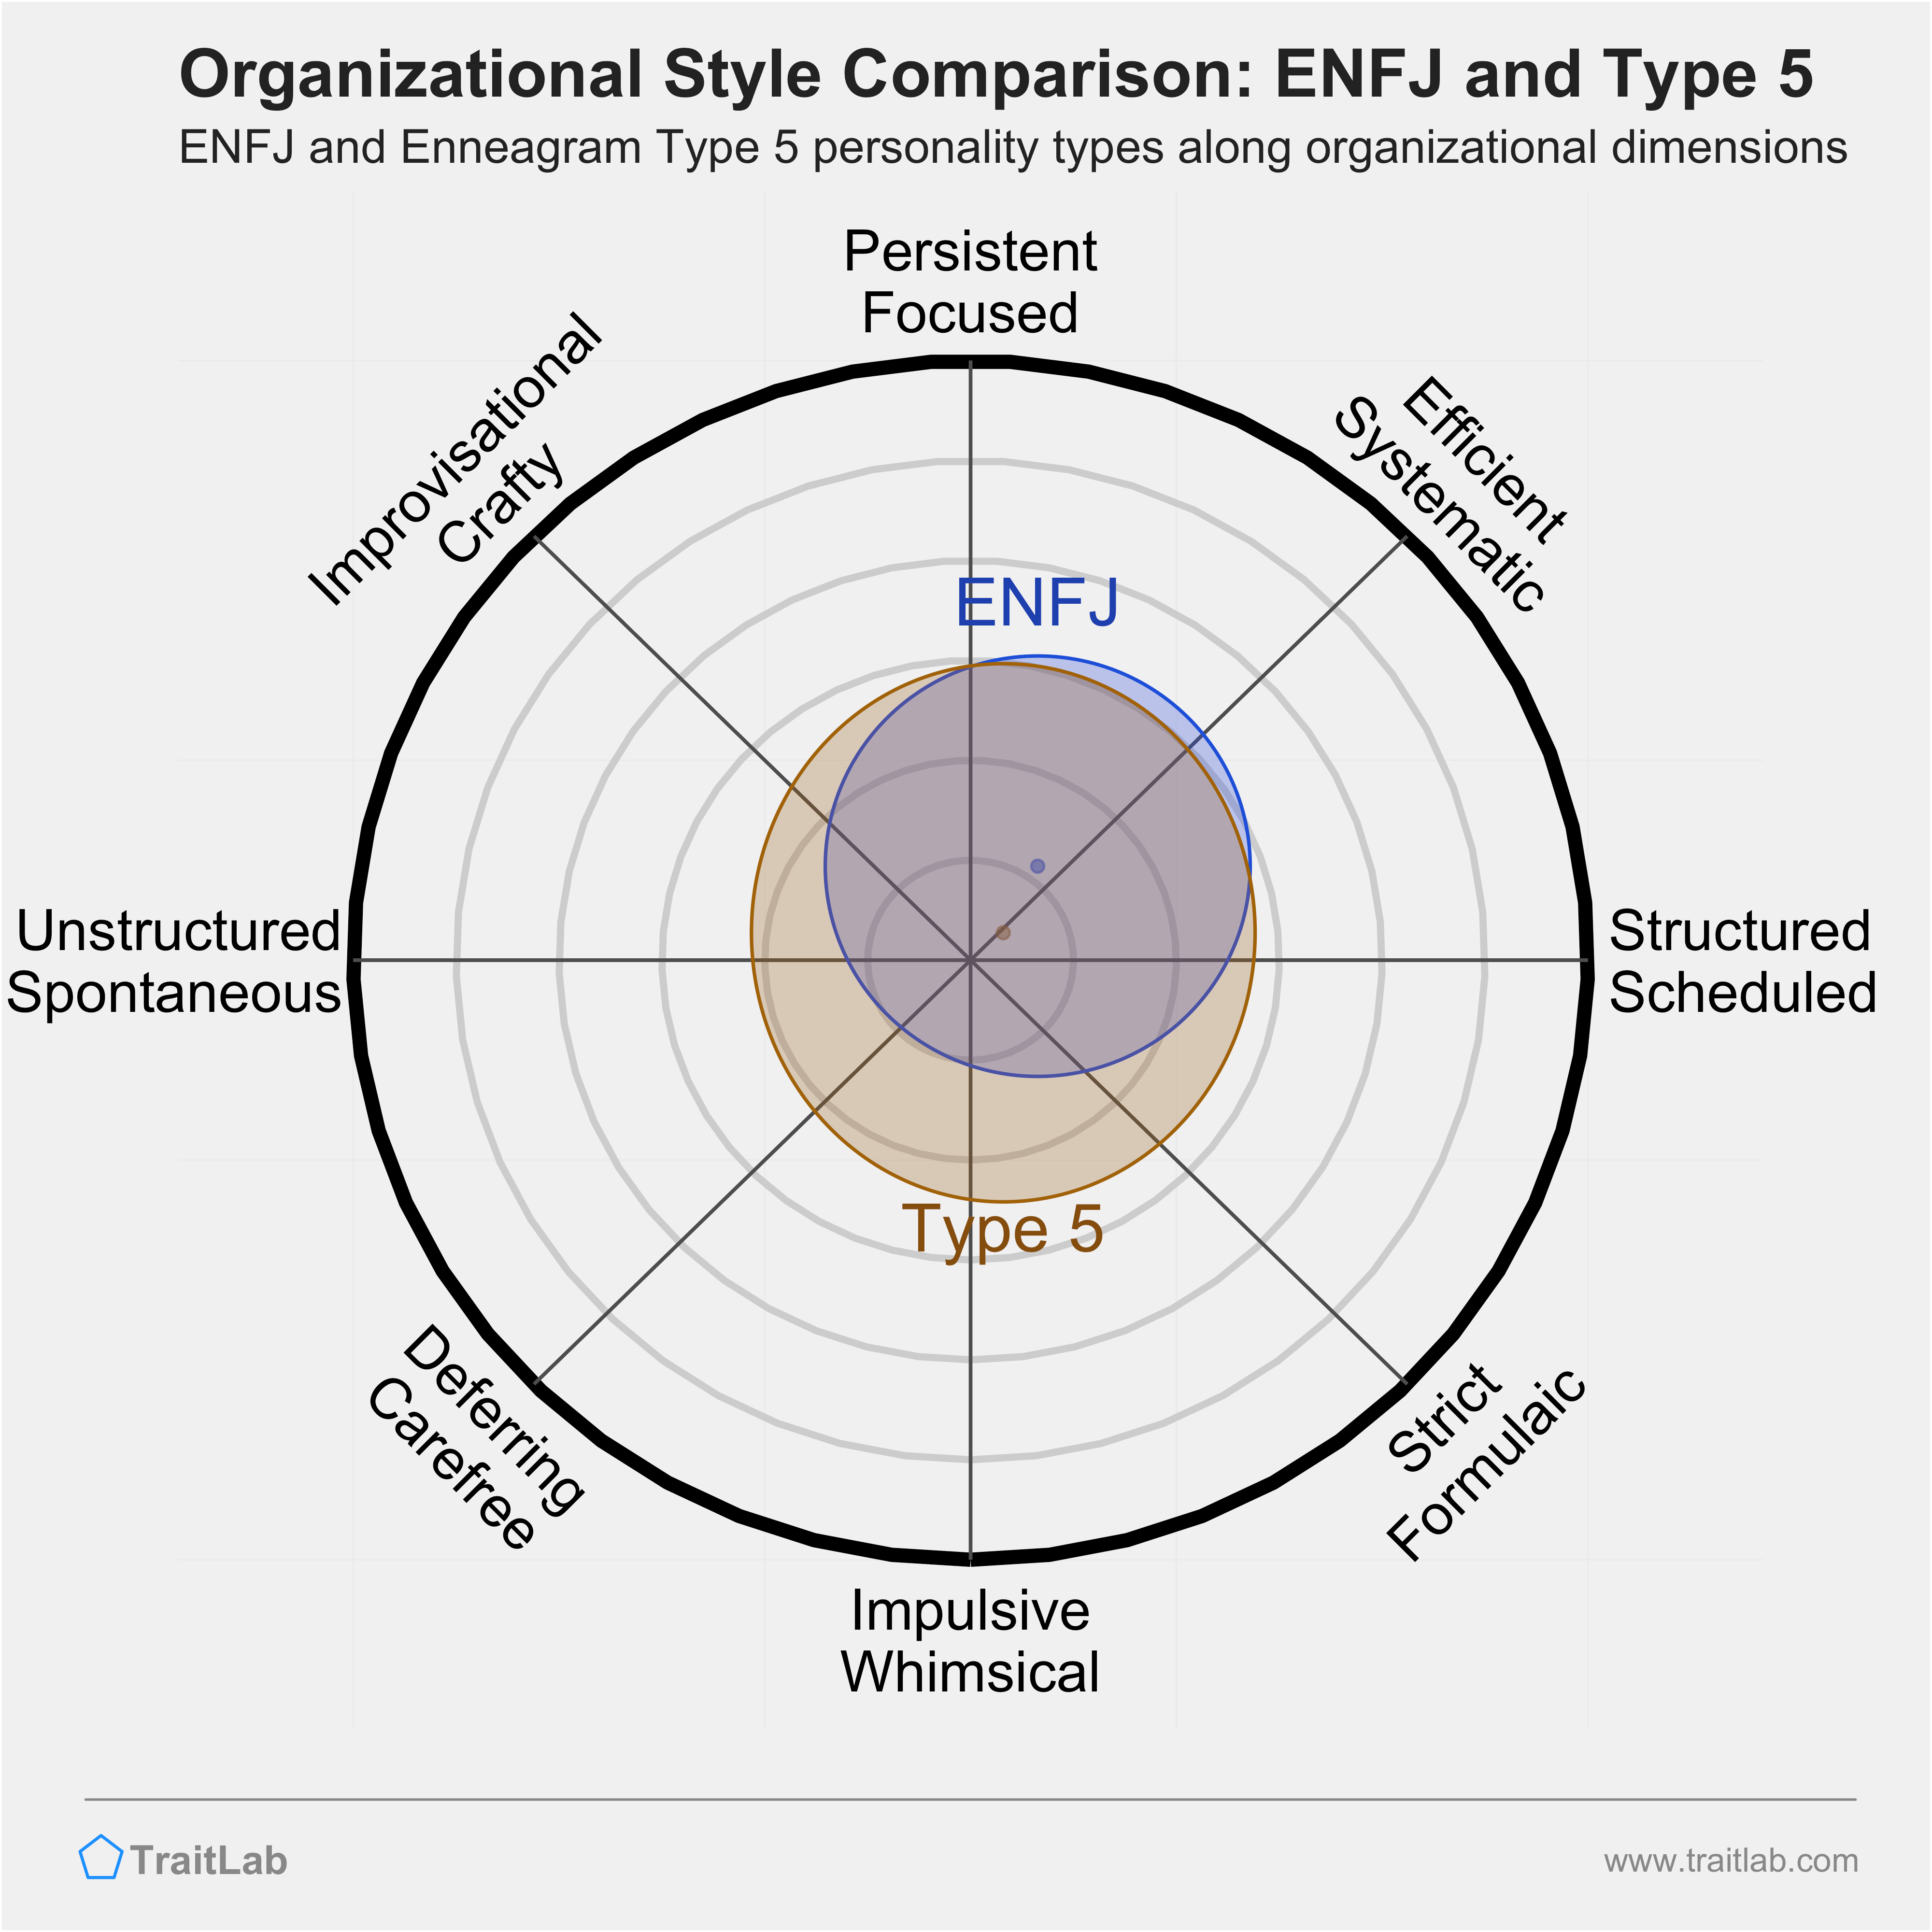 ENFJ and Type 5 comparison across organizational dimensions